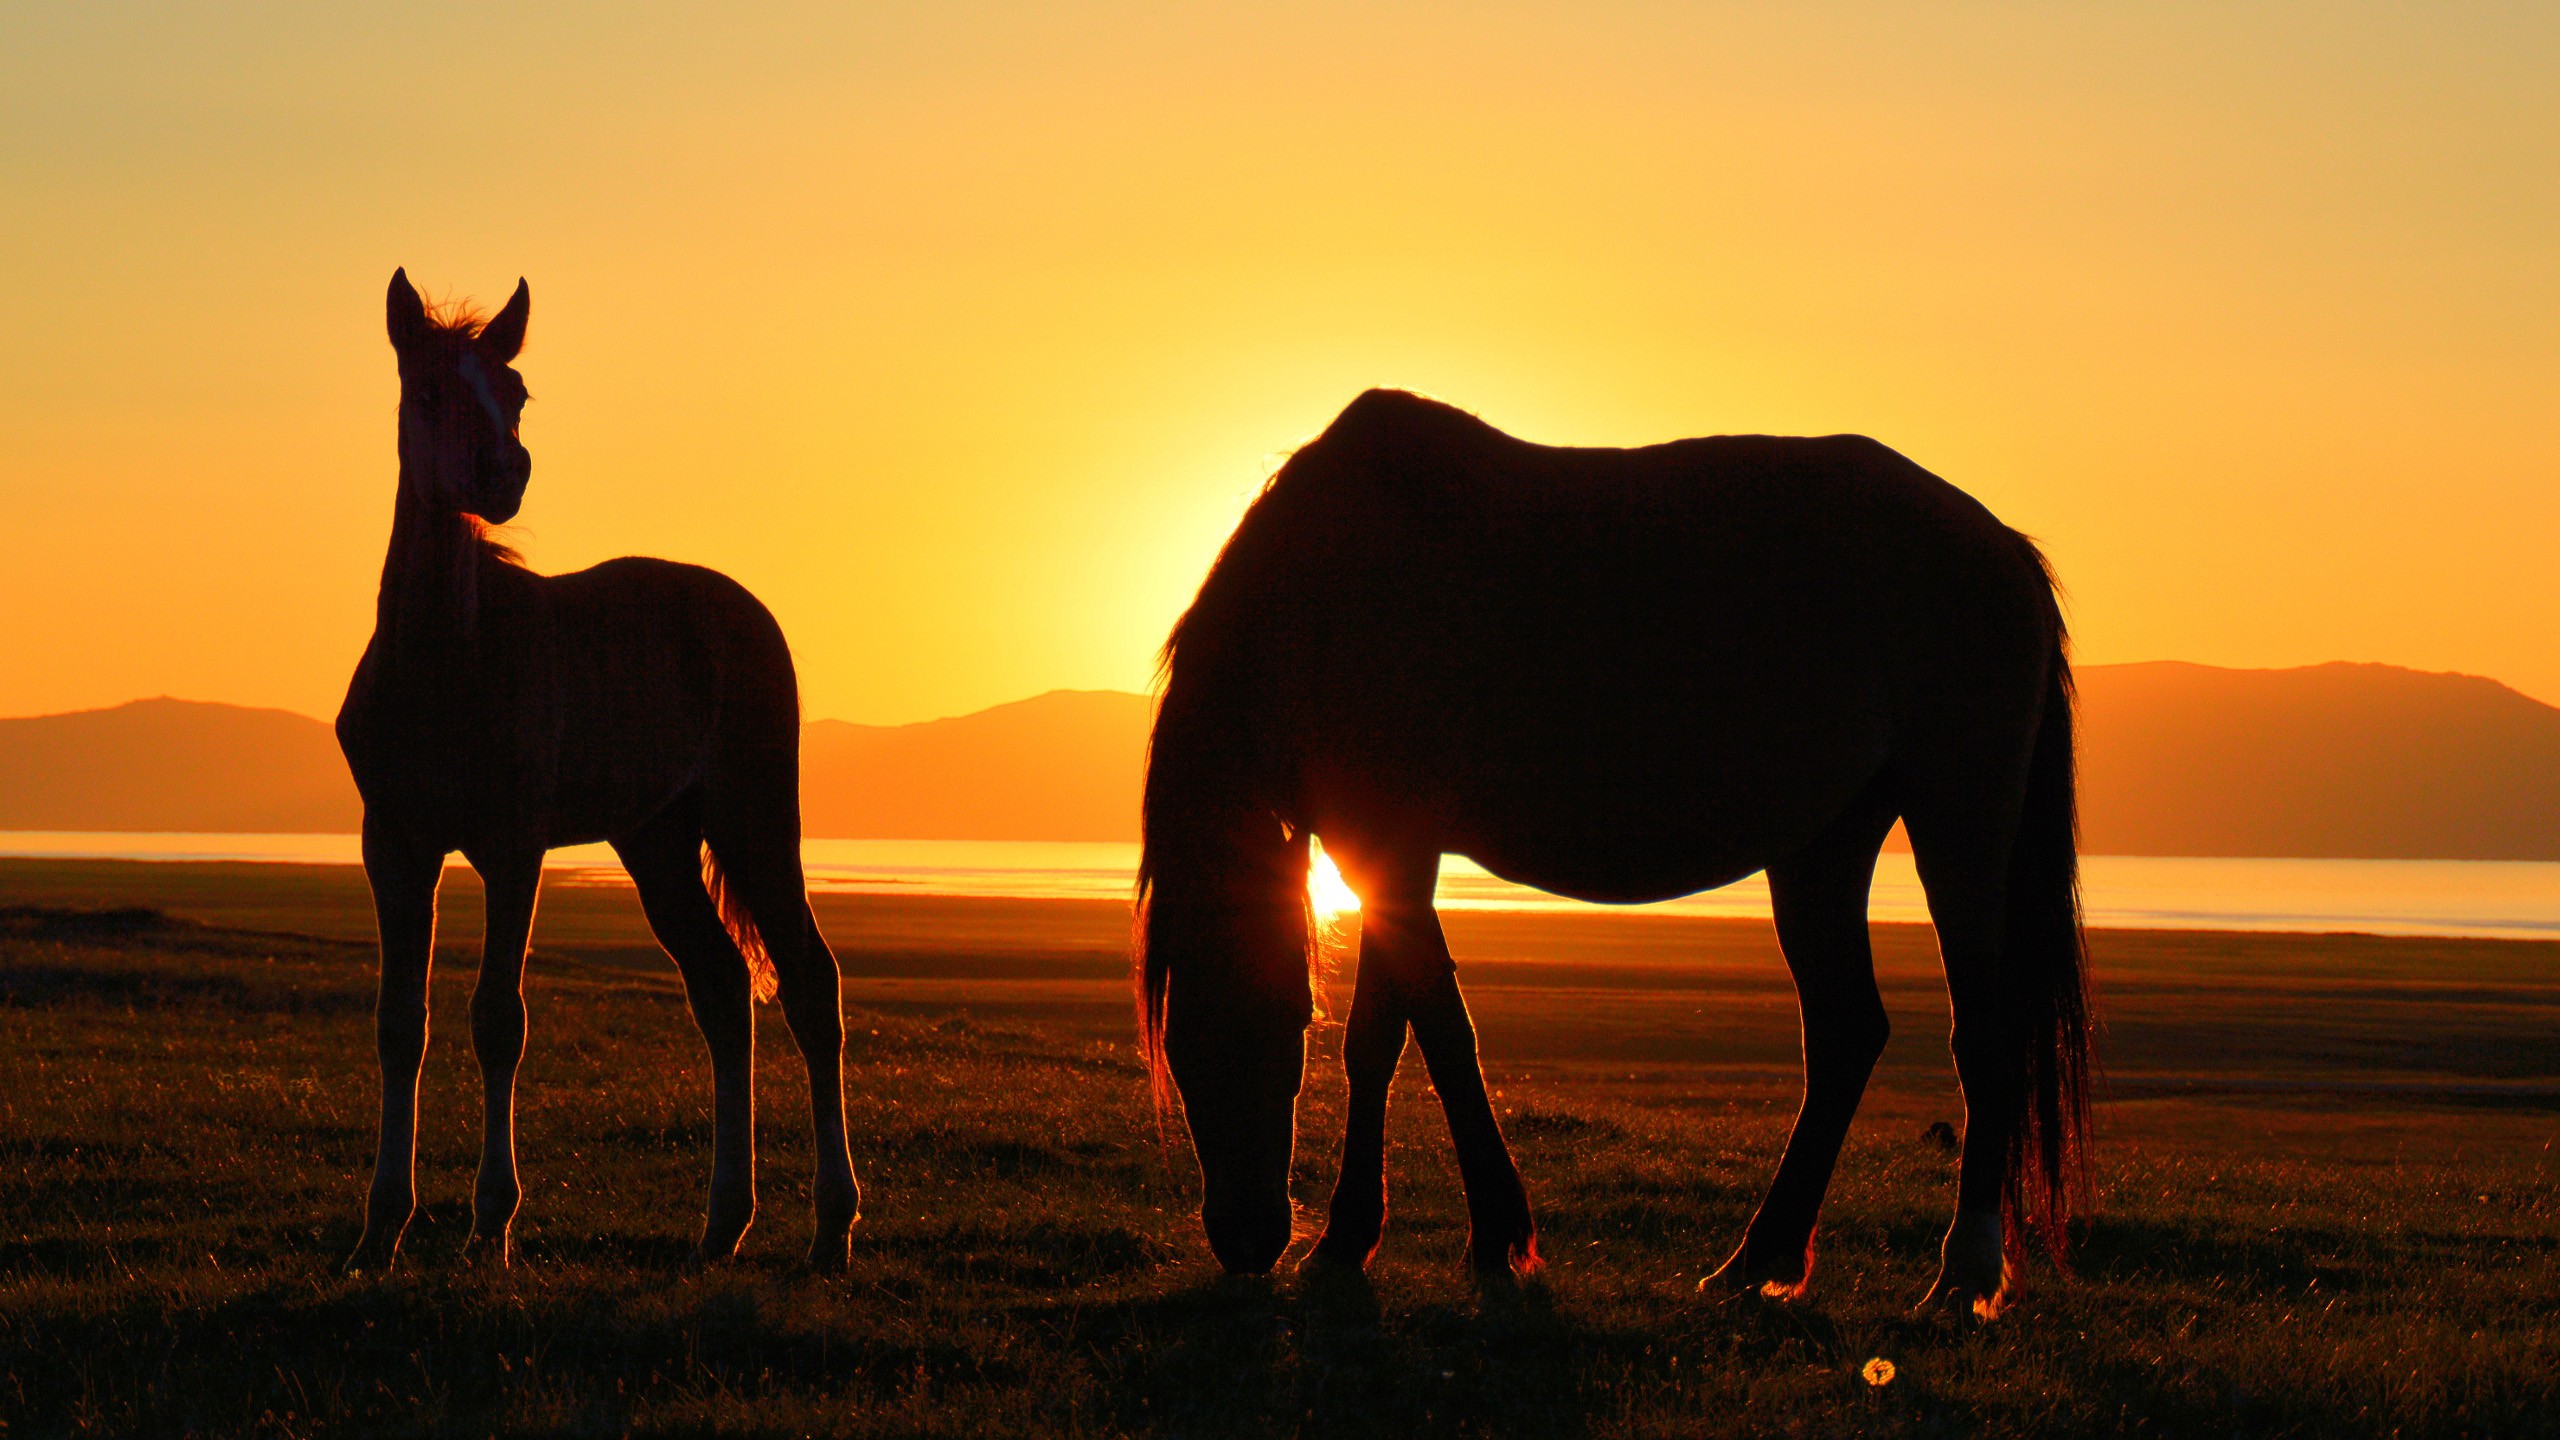 General 2560x1440 horse Kyrgyzstan Song Kul sunset lake silhouette animals mammals orange sky low light